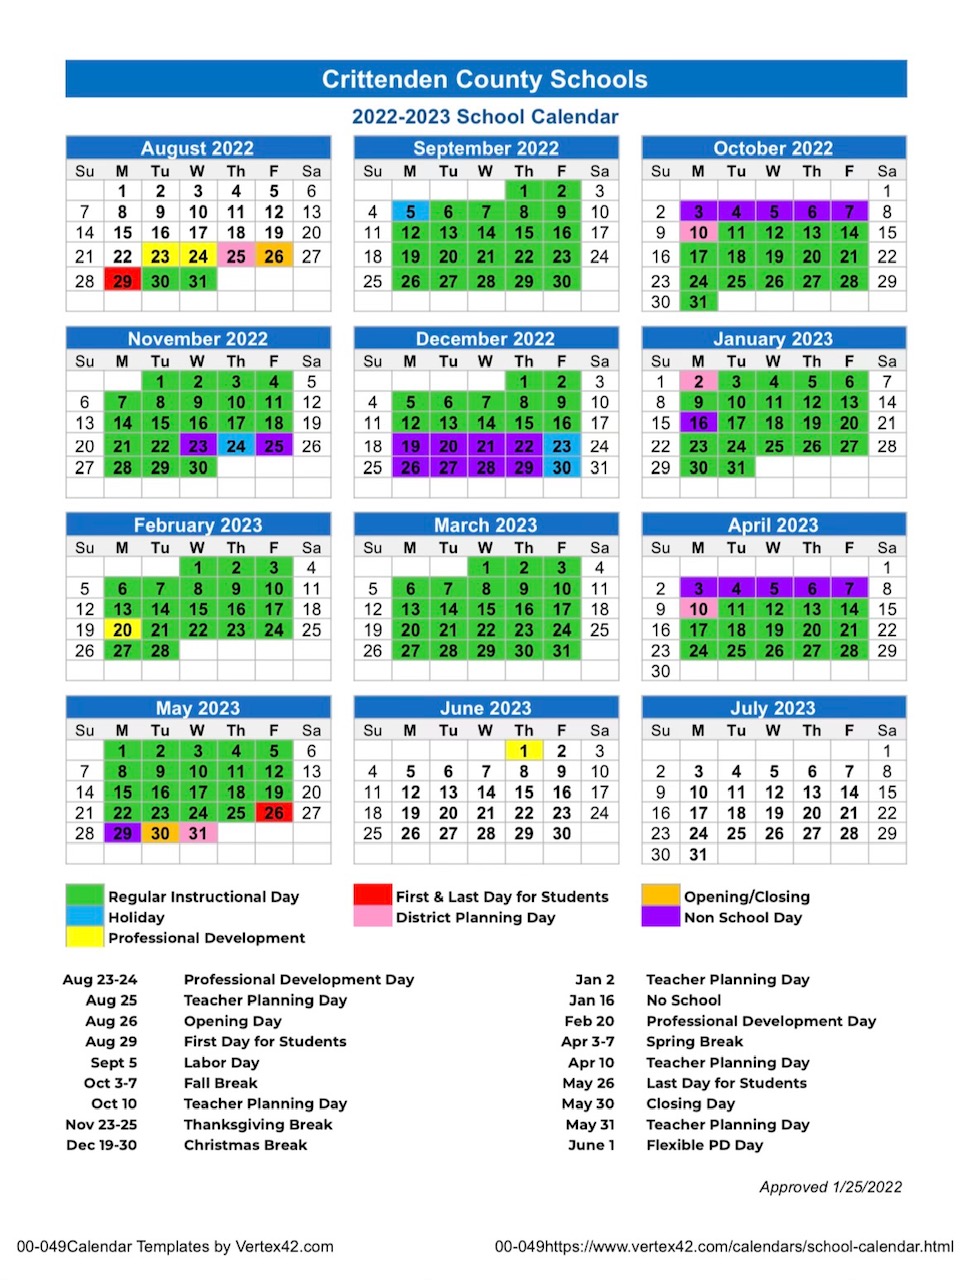 Crittenden County Schools Calendar 2022 And 2023 PublicHolidays